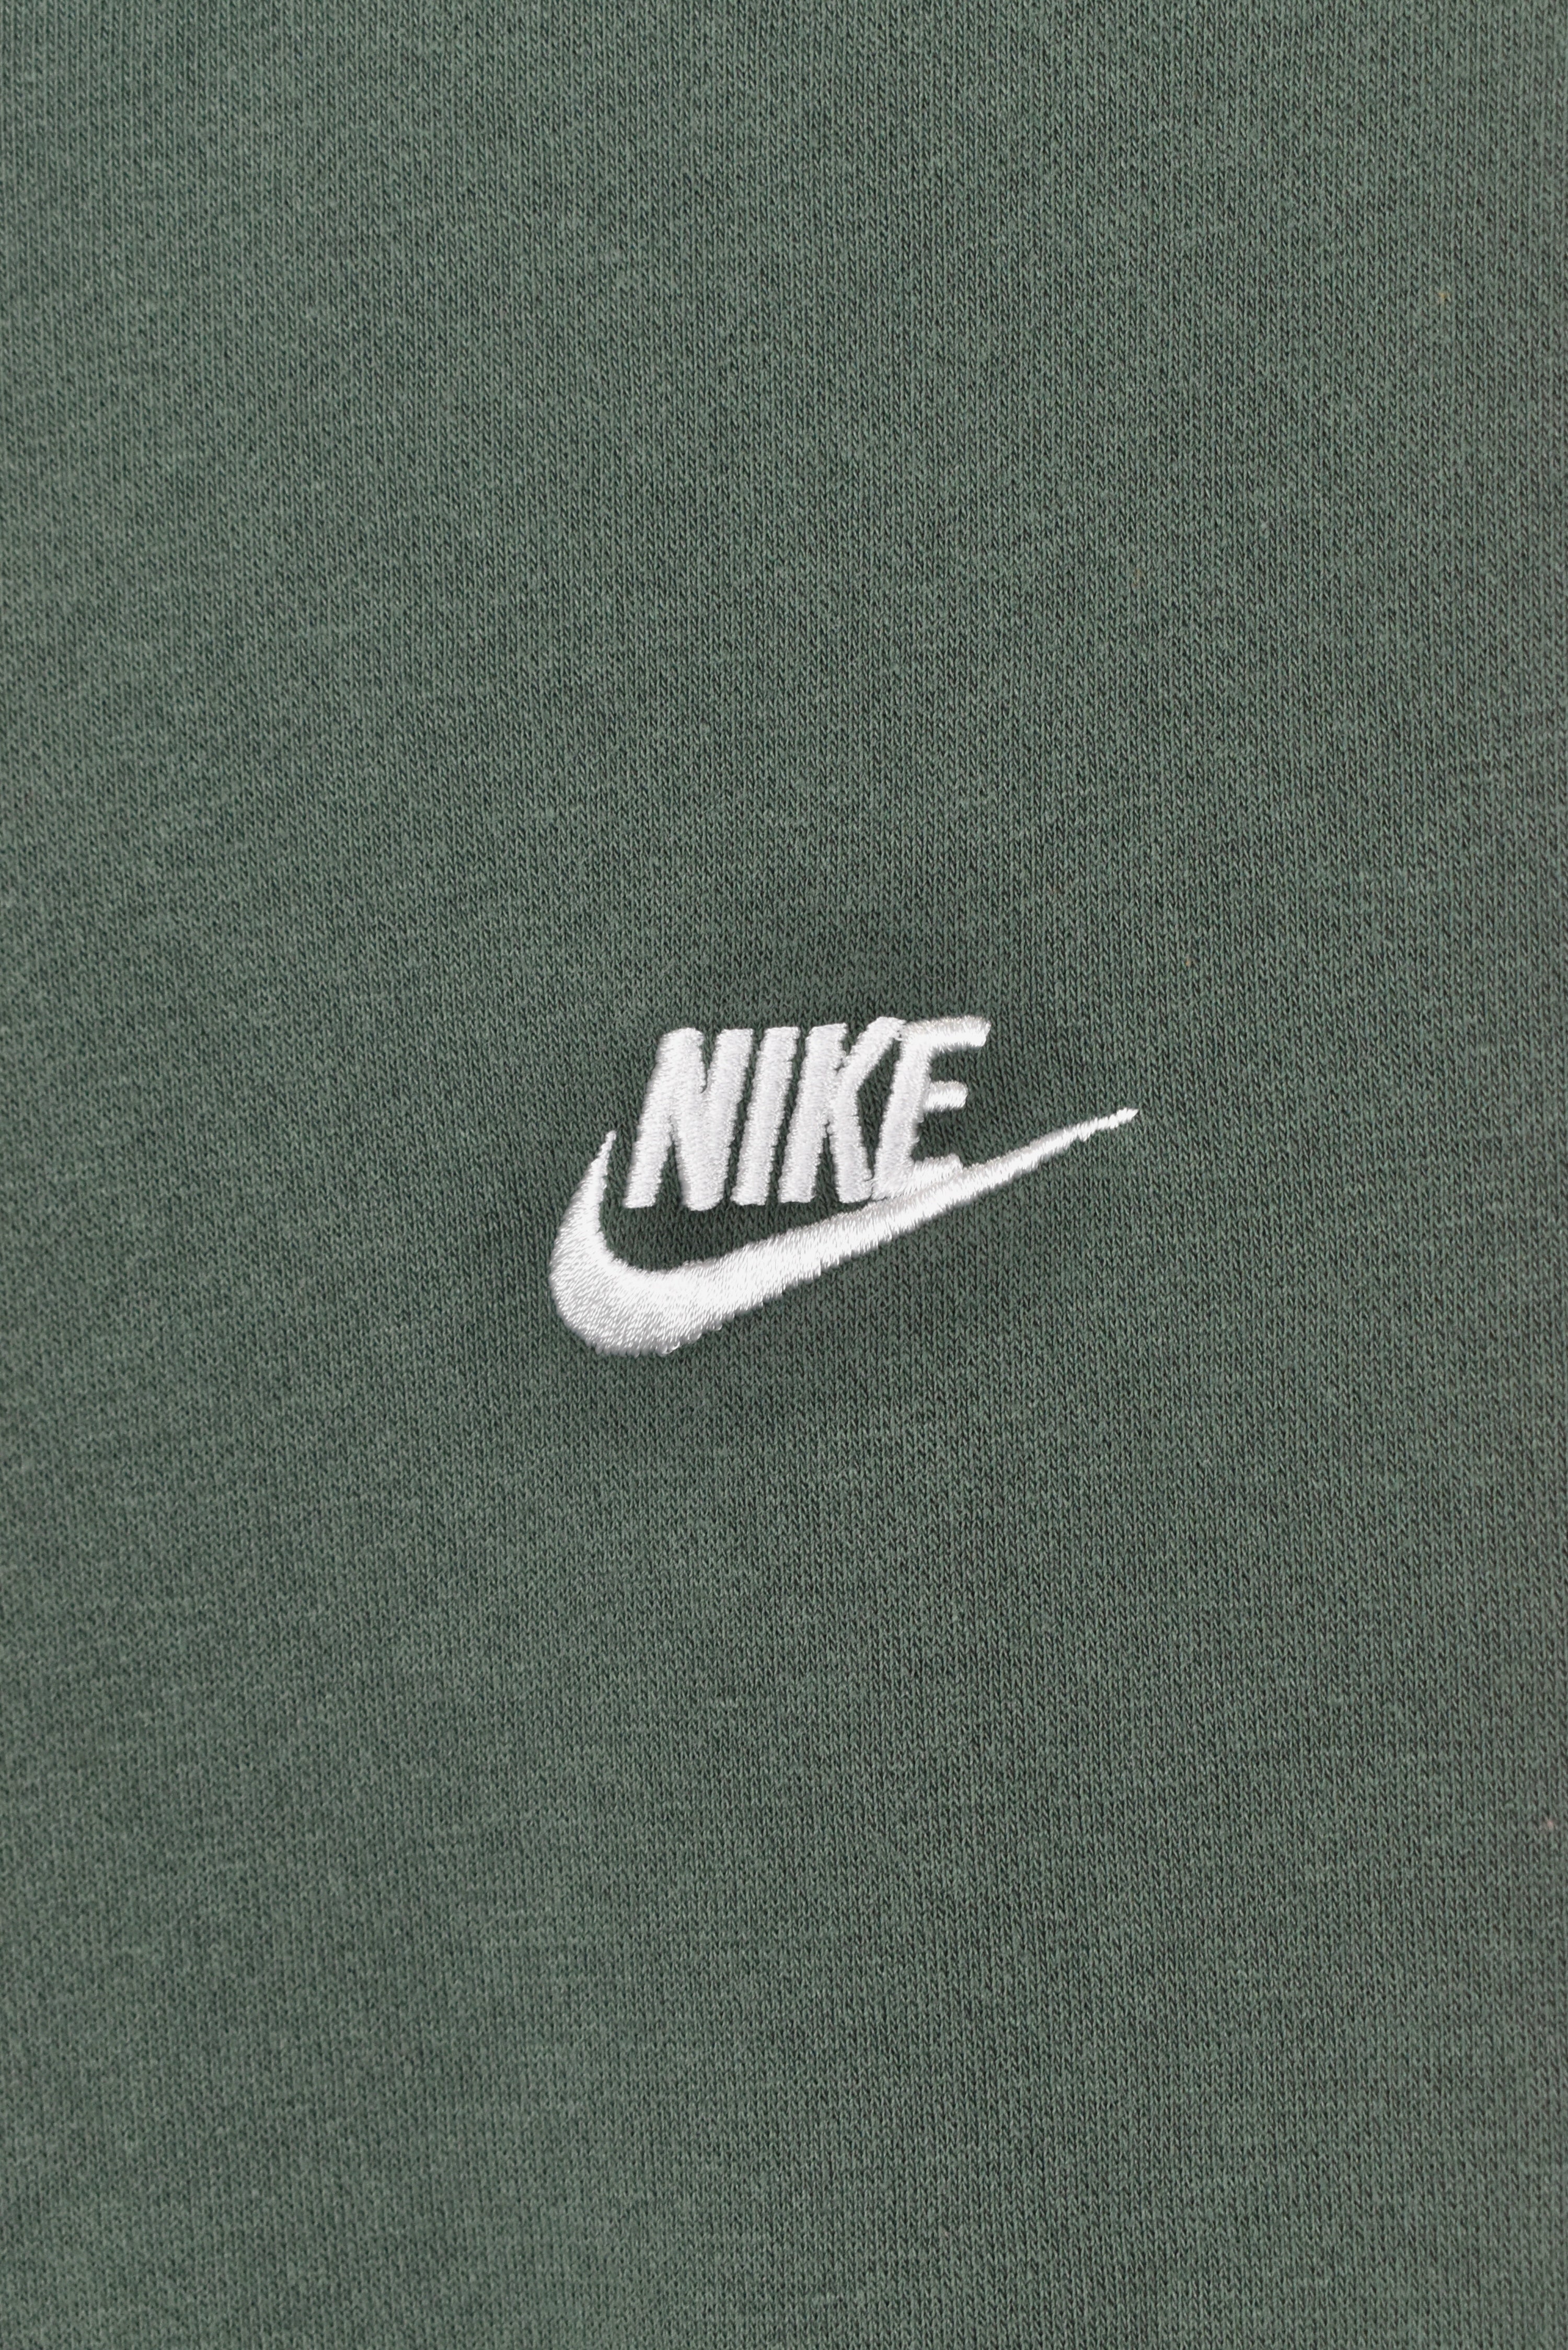 Vintage Nike hoodie, green embroidered sweatshirt - AU Large NIKE